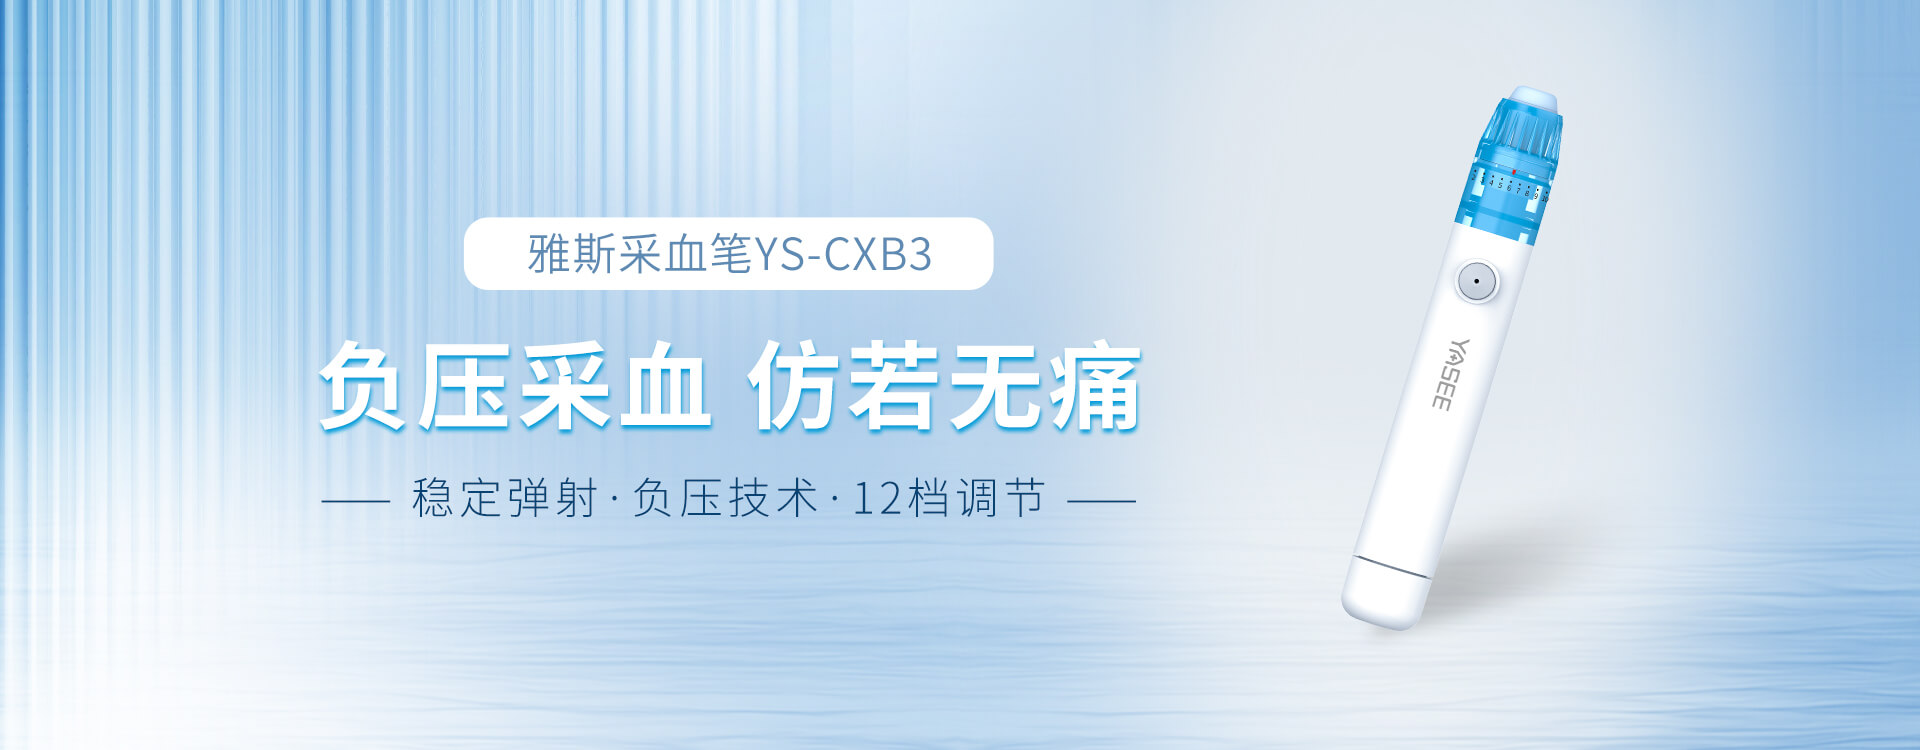 雅斯采血笔YS-CXB3 banner